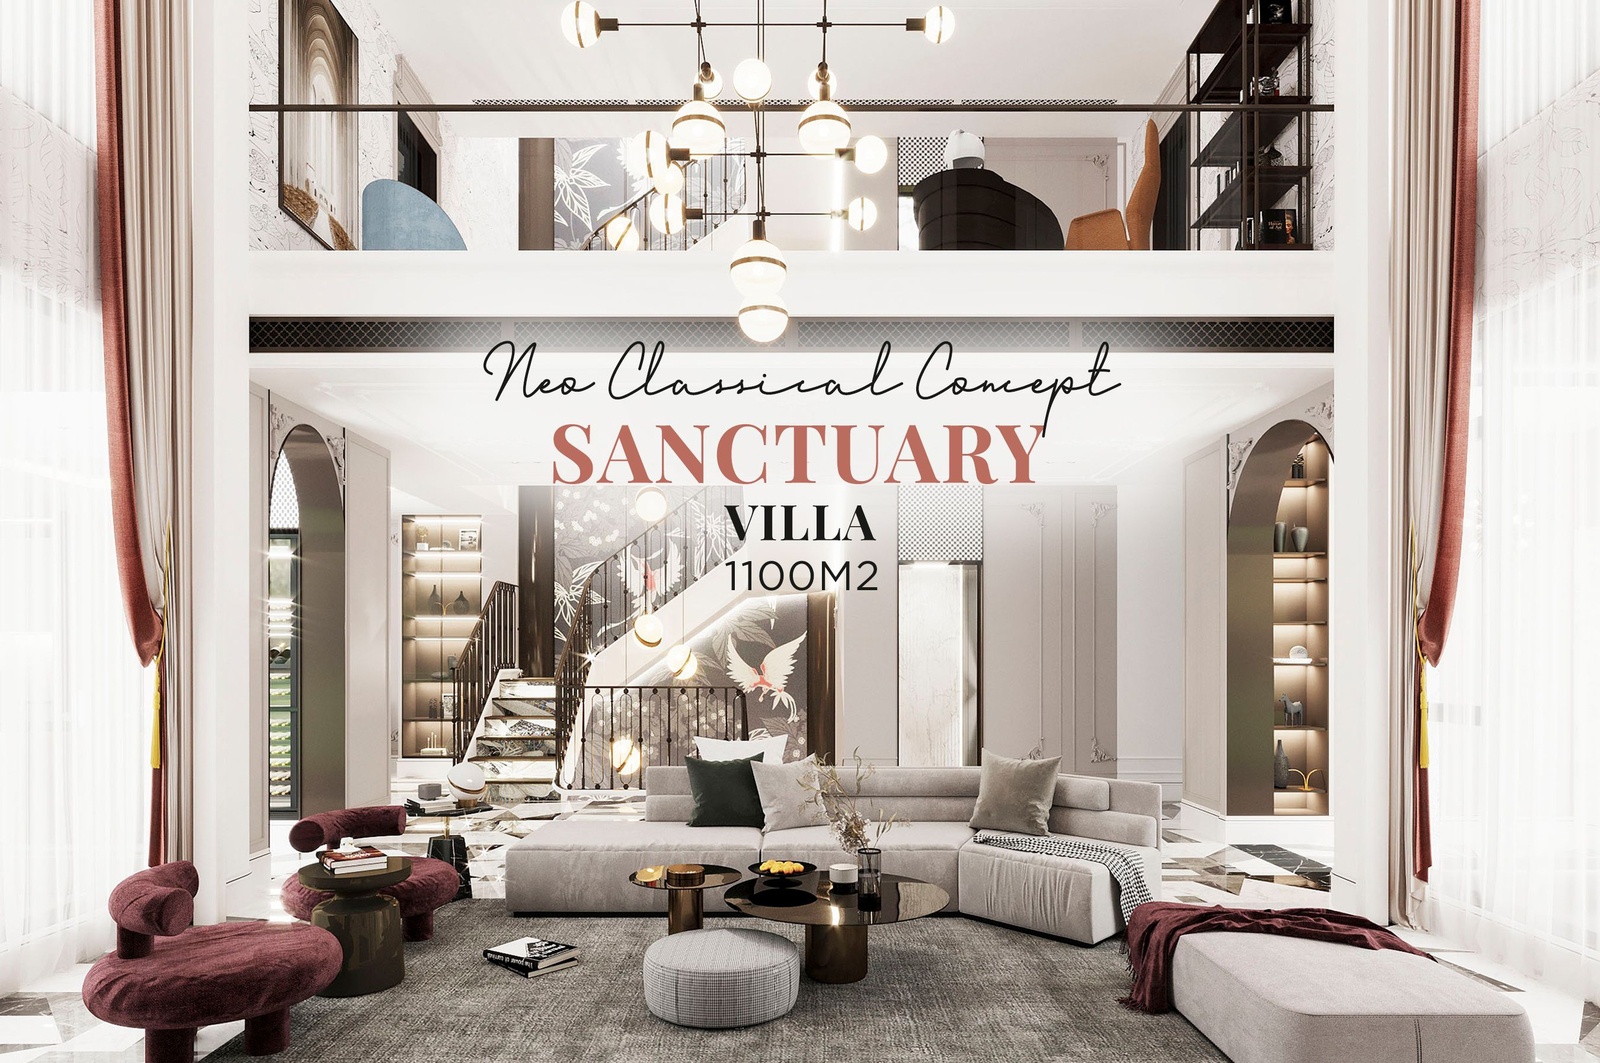 Nội thất biệt thự Sanctuary Villa 1100m2